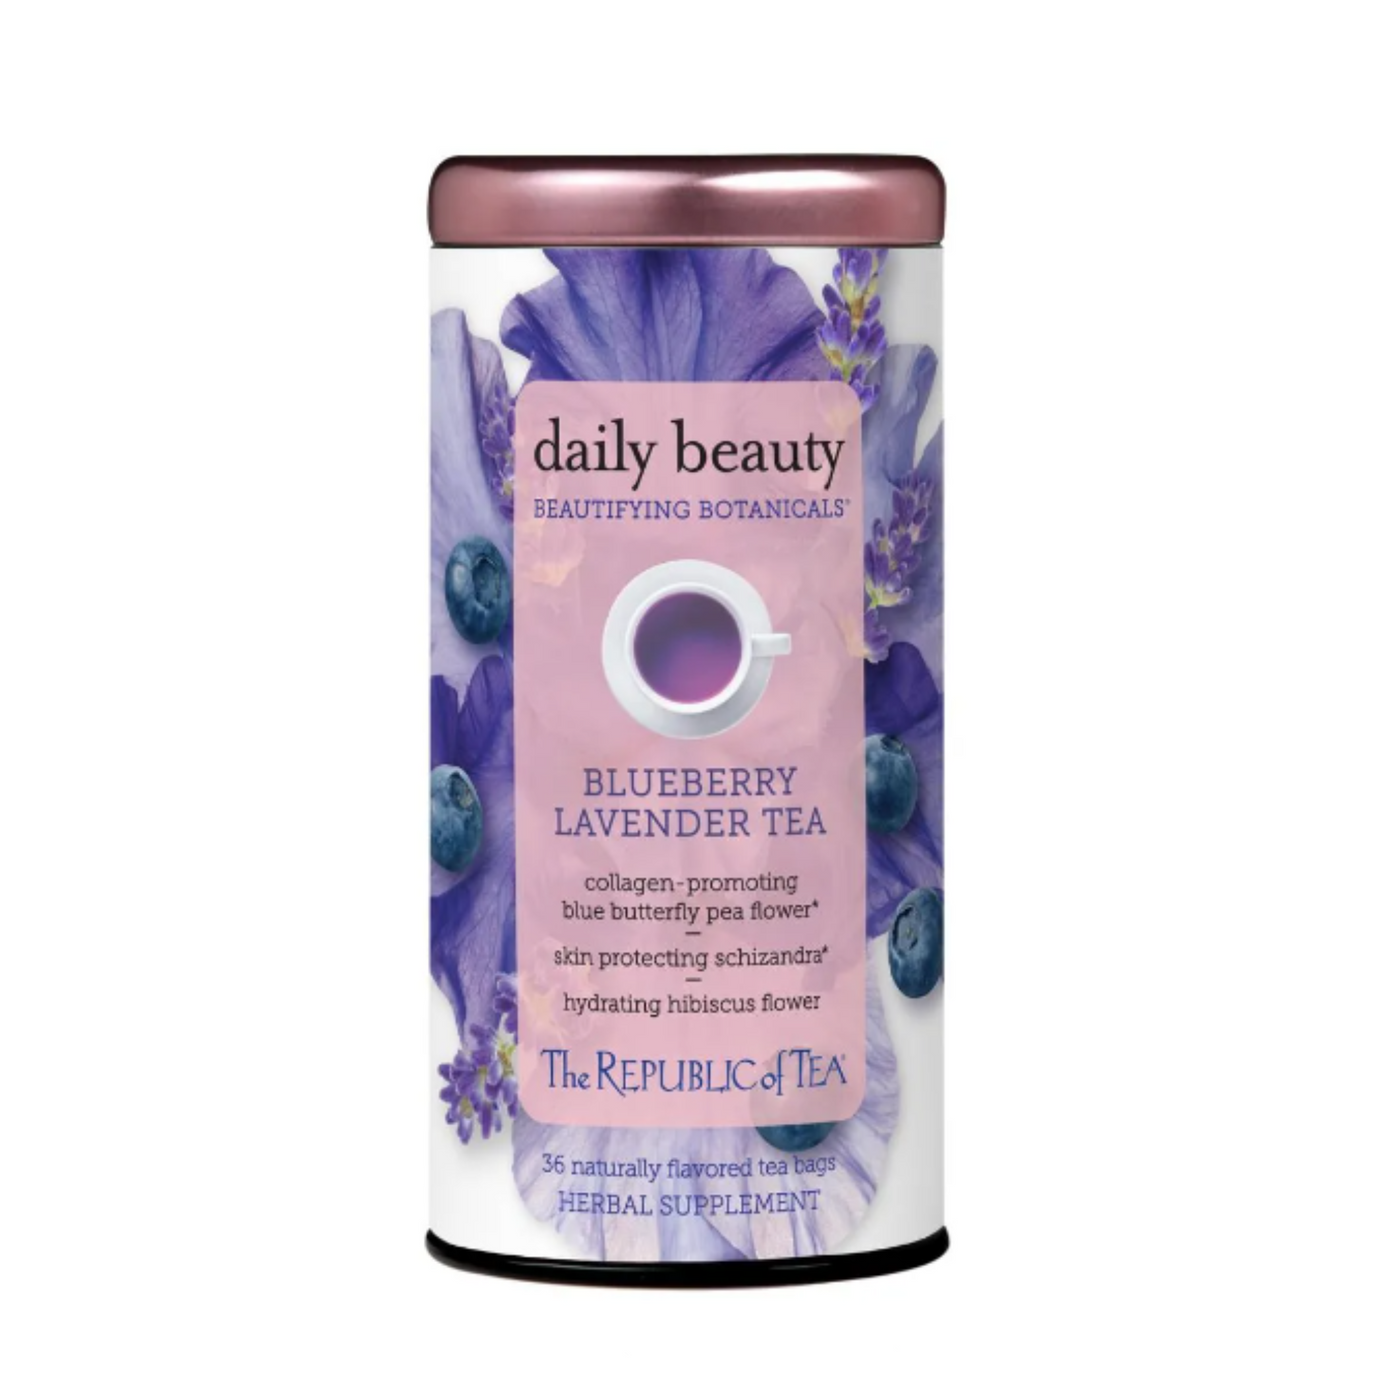 Daily Beauty Blueberry Lavender Tea